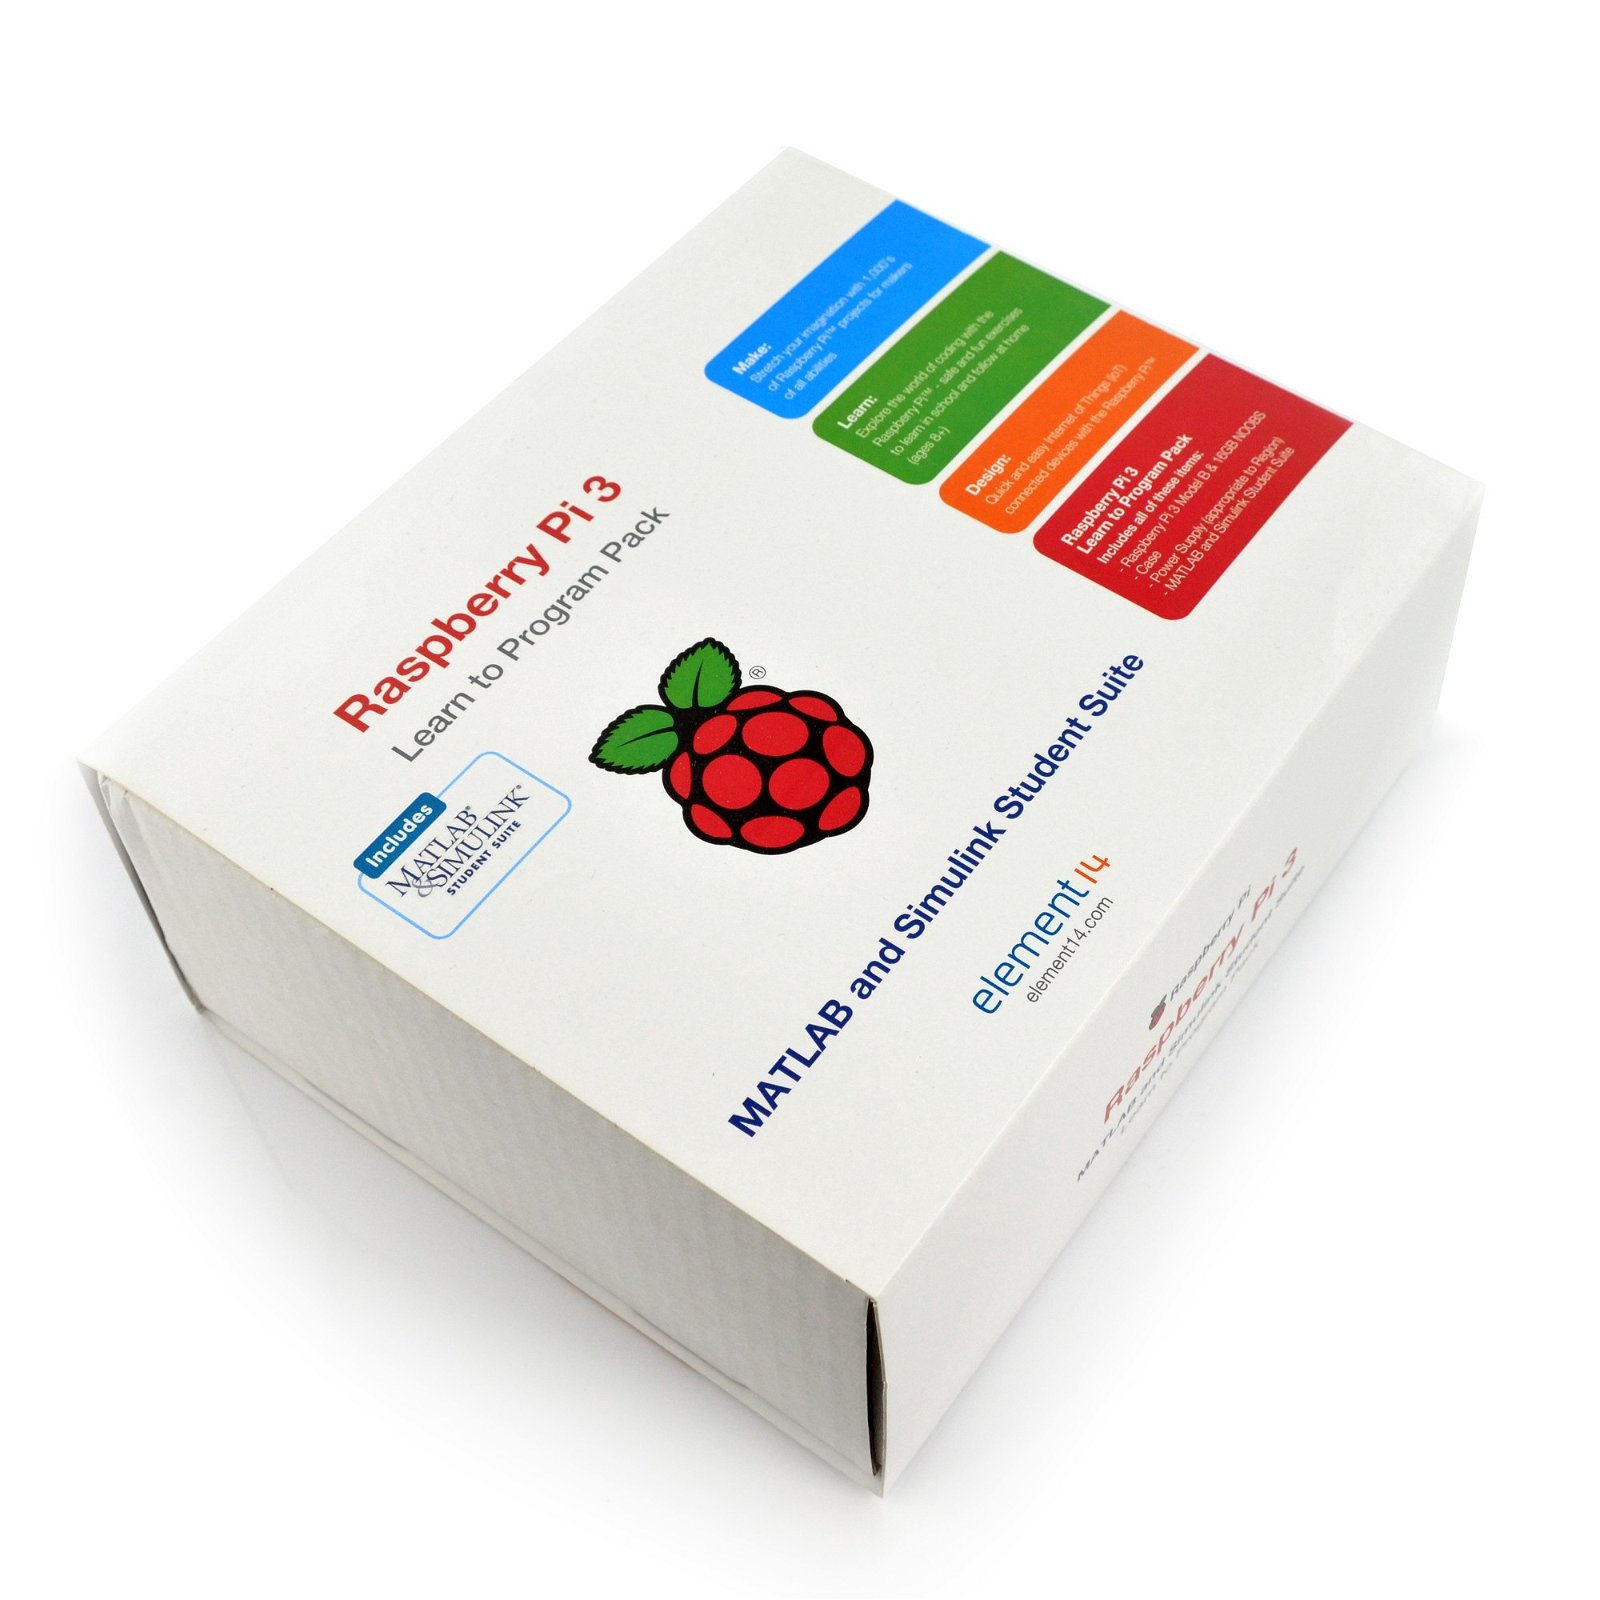 Sada Raspberry Pi 2 model B + pouzdro + napájecí zdroj 6 karet + MatLab